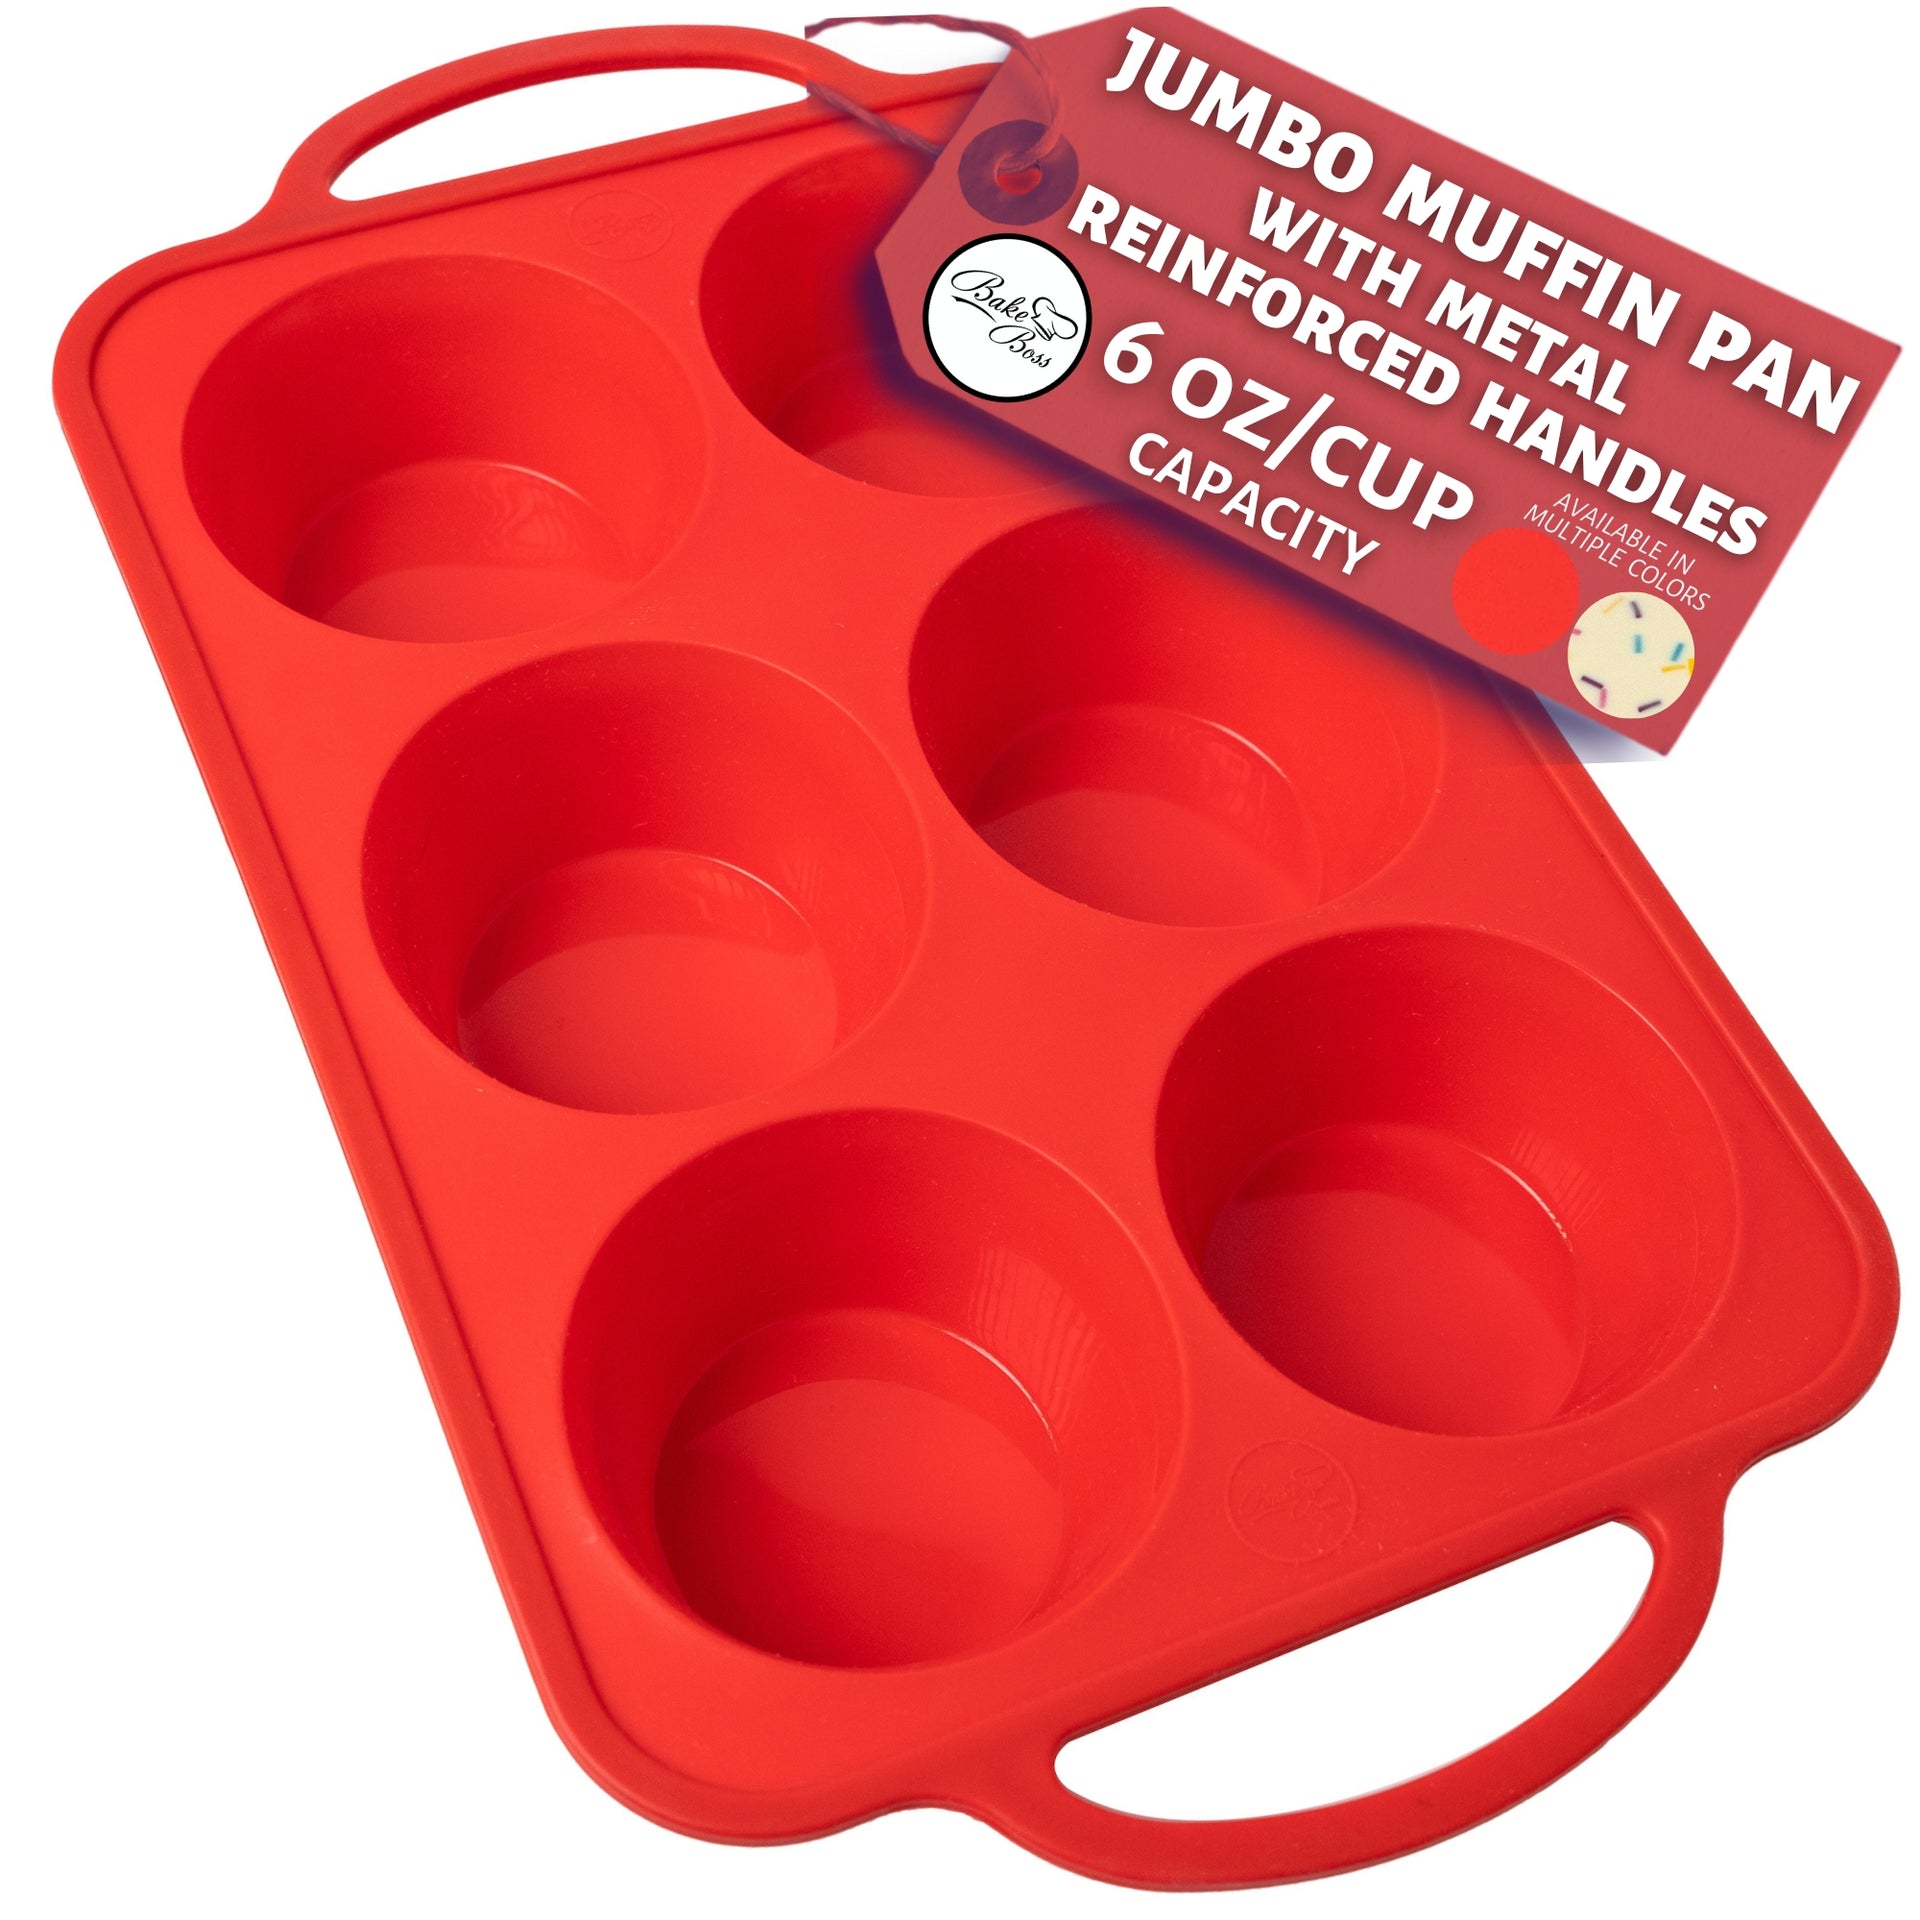 Silicone Texas Muffin Pan Set- 6 Cup Jumbo Silicone Cupcake Pan